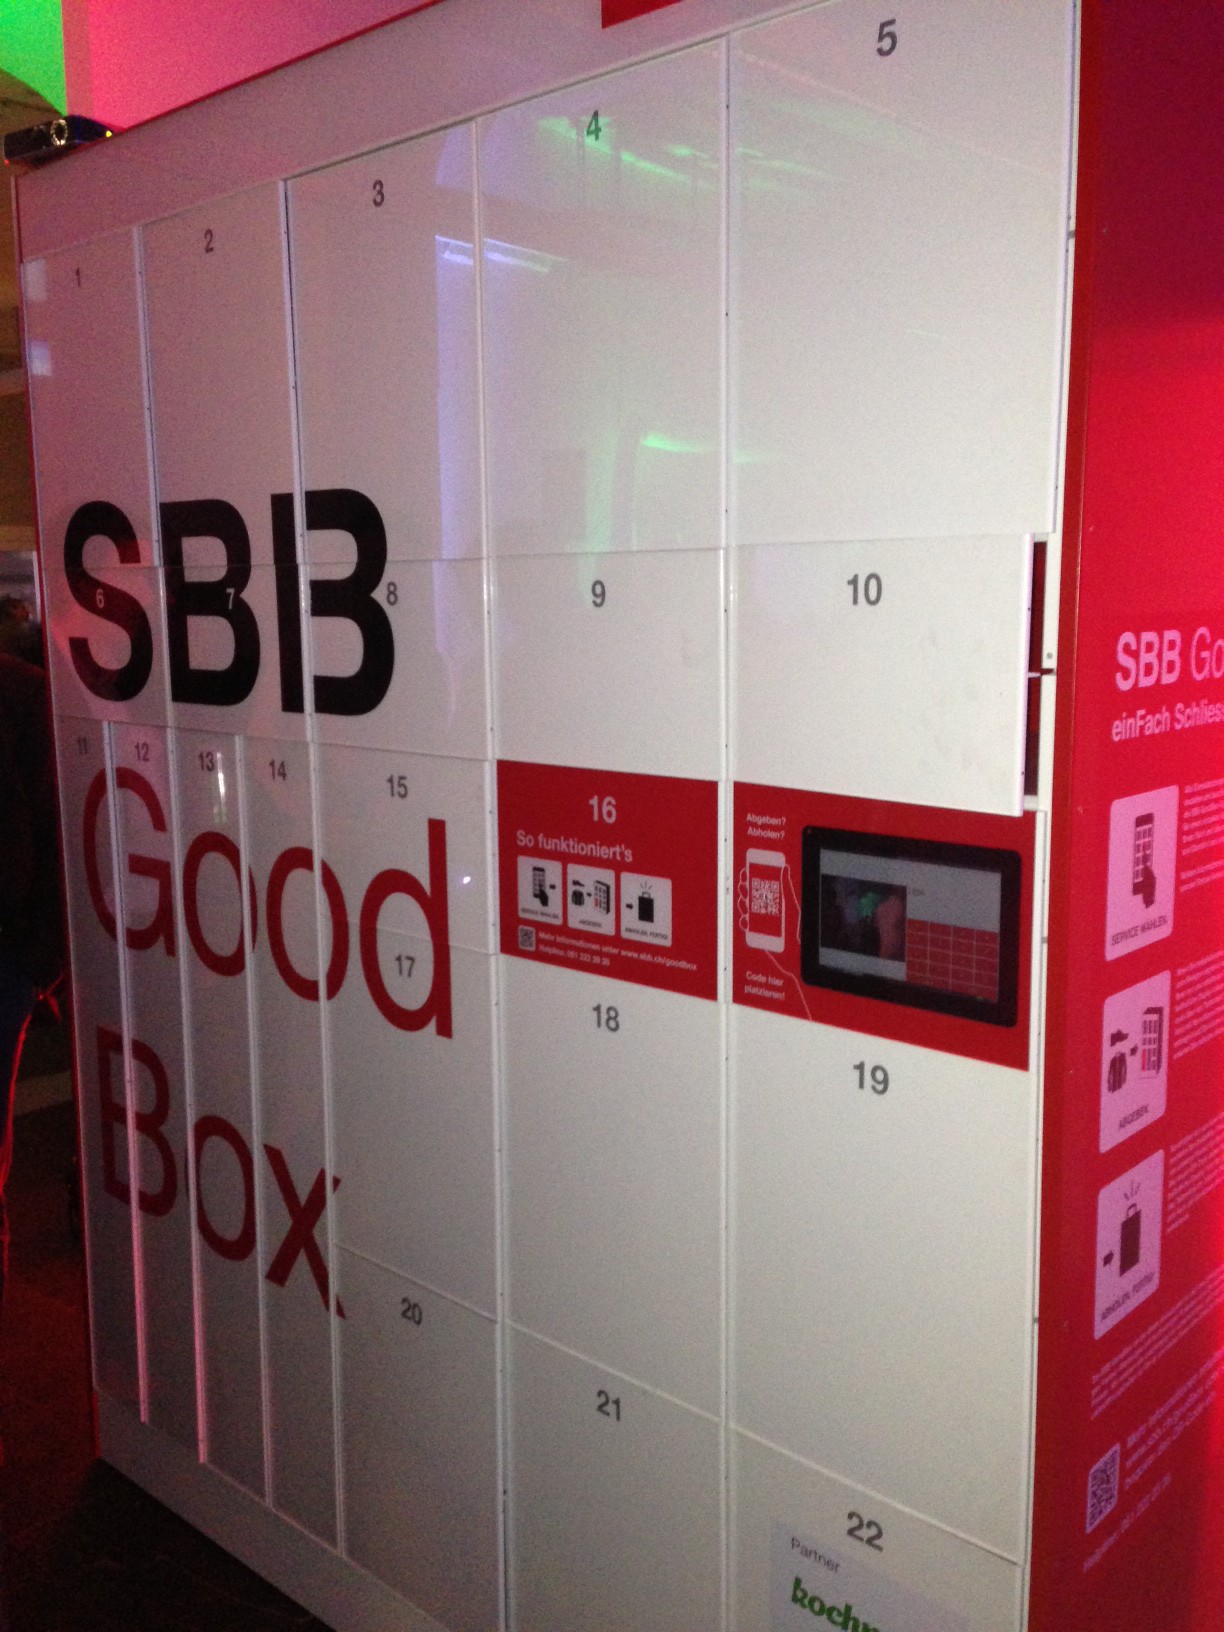 SBB Good Box